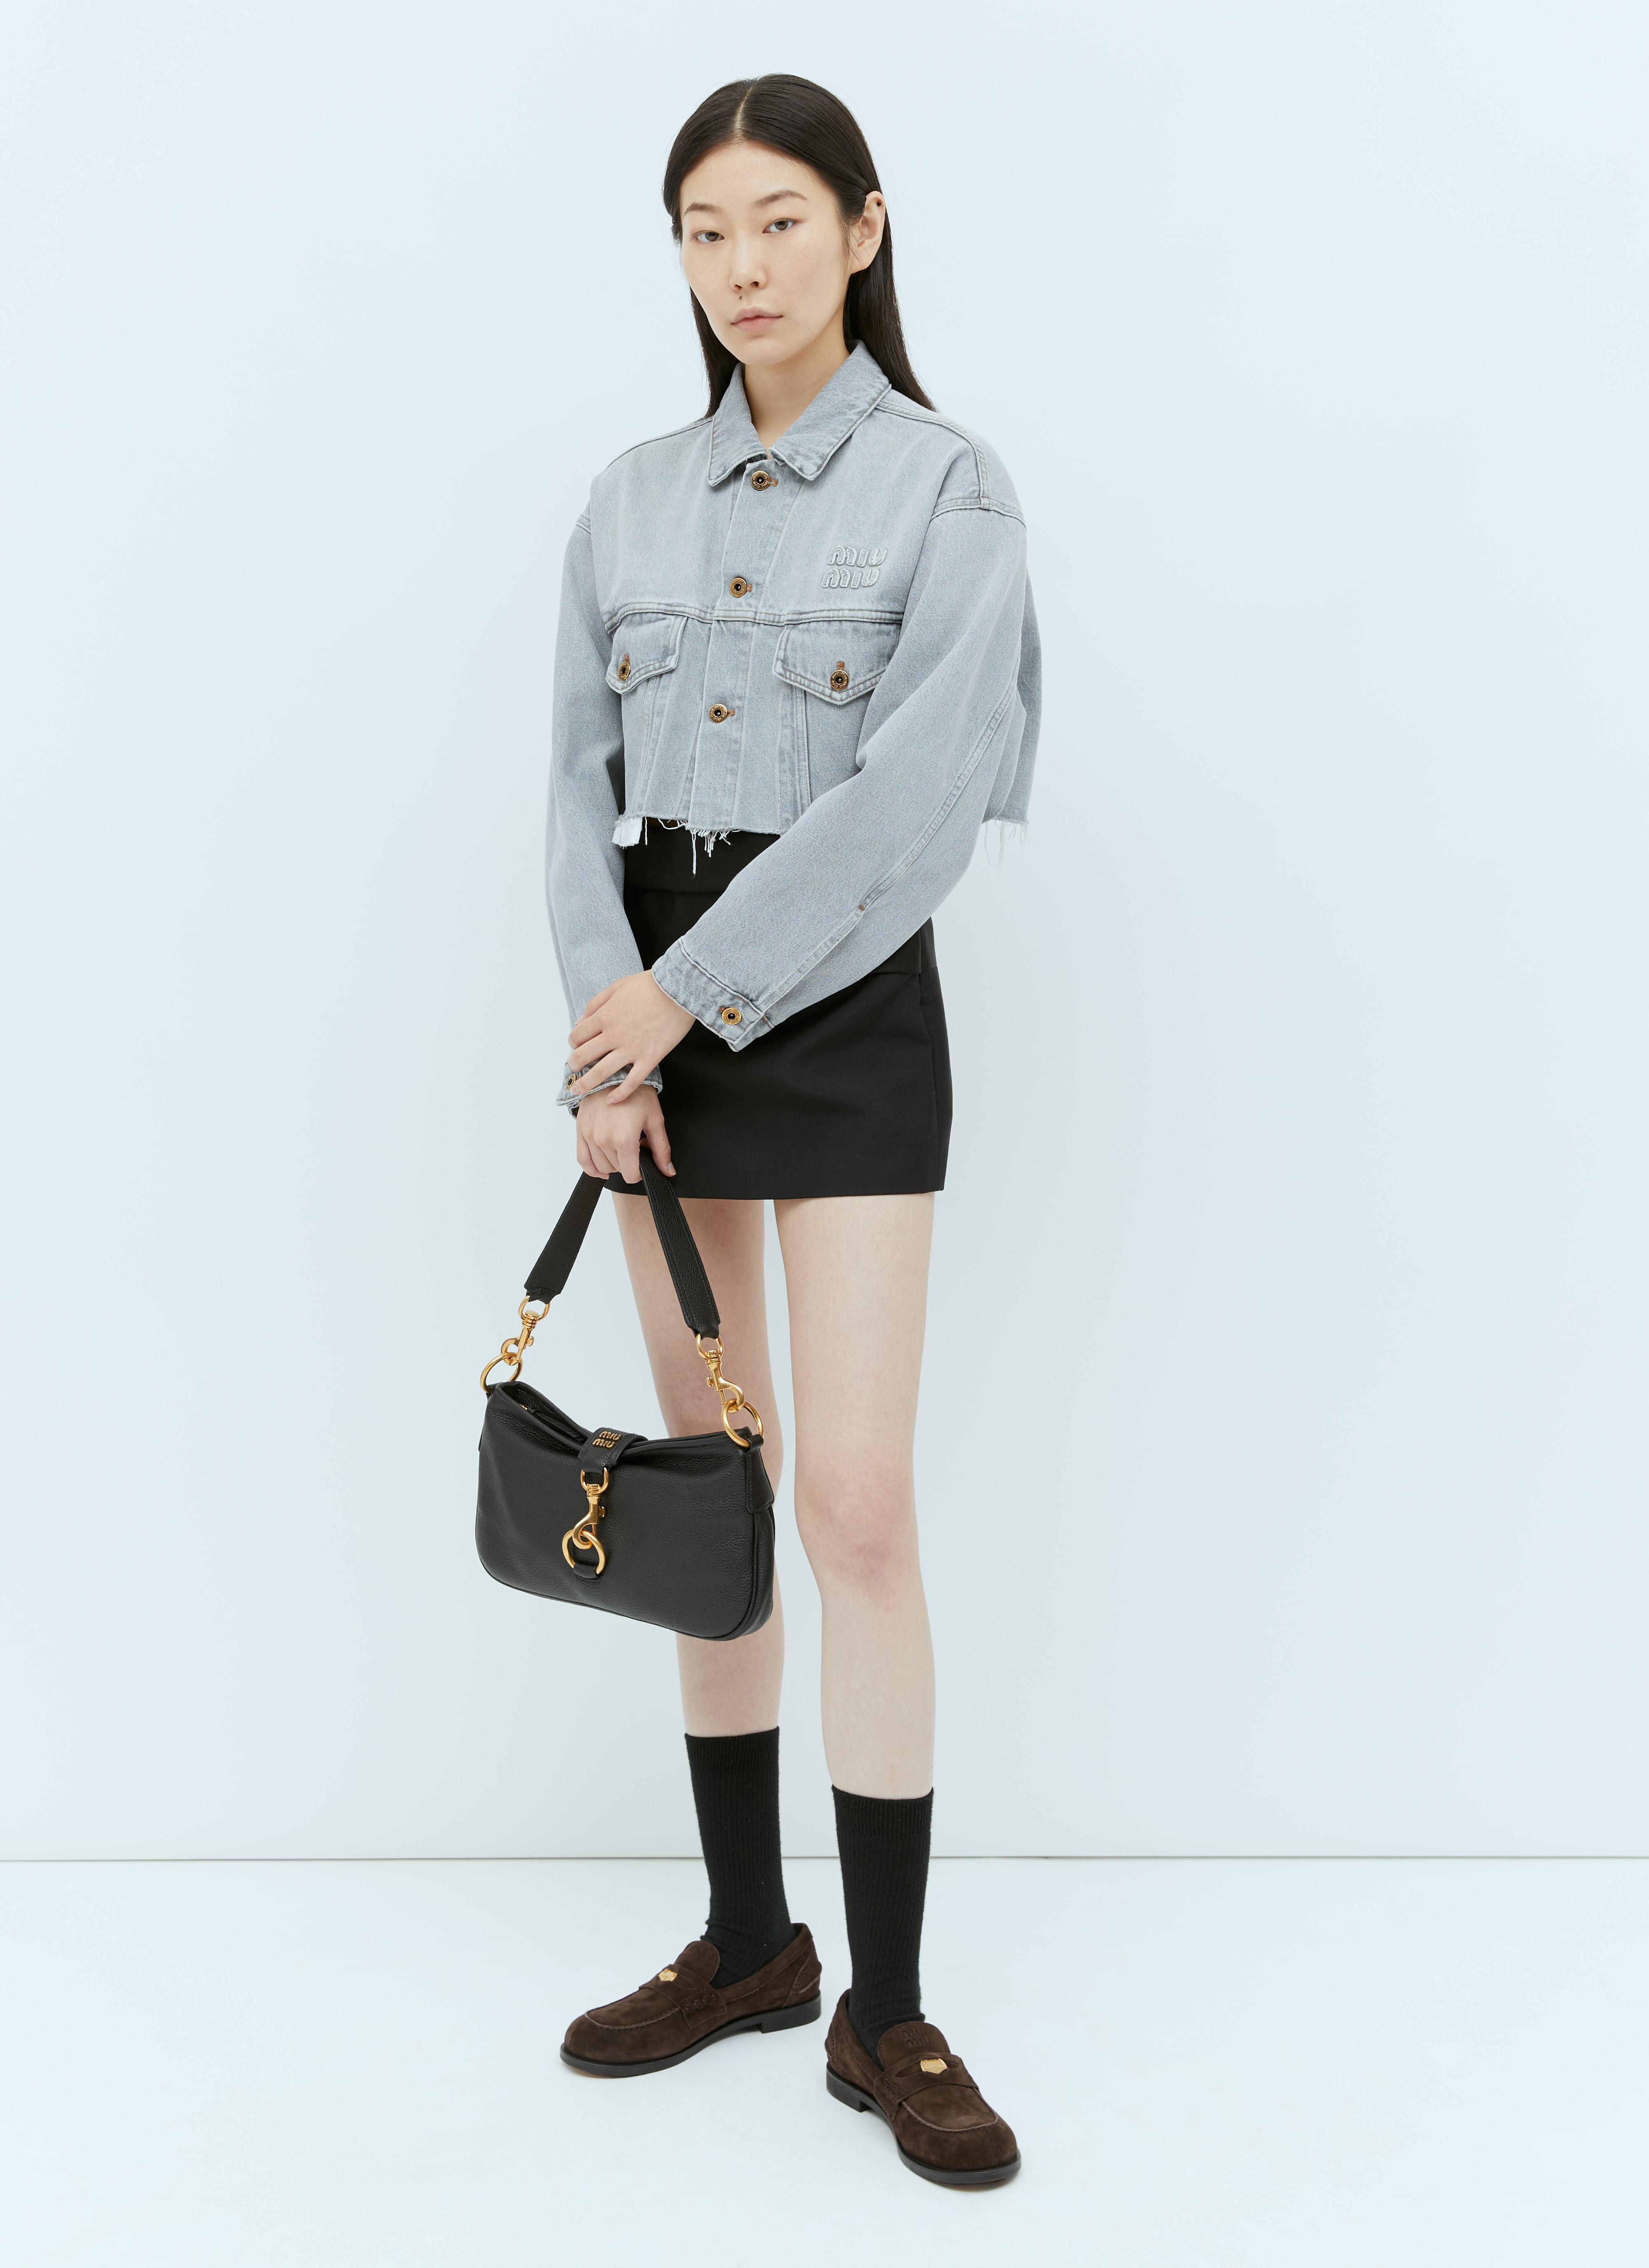 Miu Miu Leather Shoulder Bag in Black